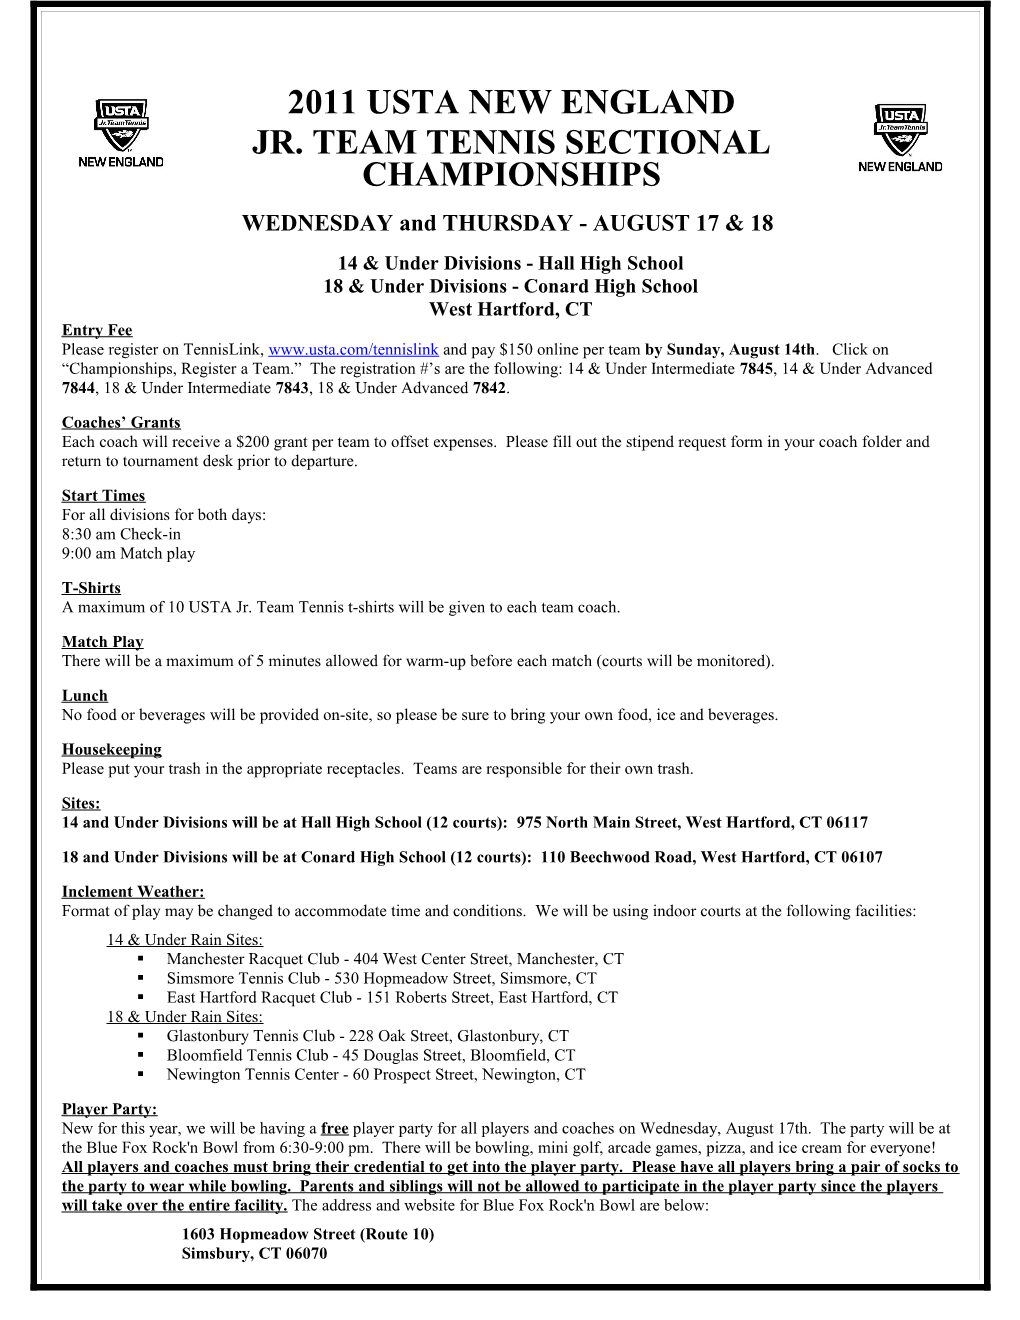 Jr. Team Tennis Sectional Championships